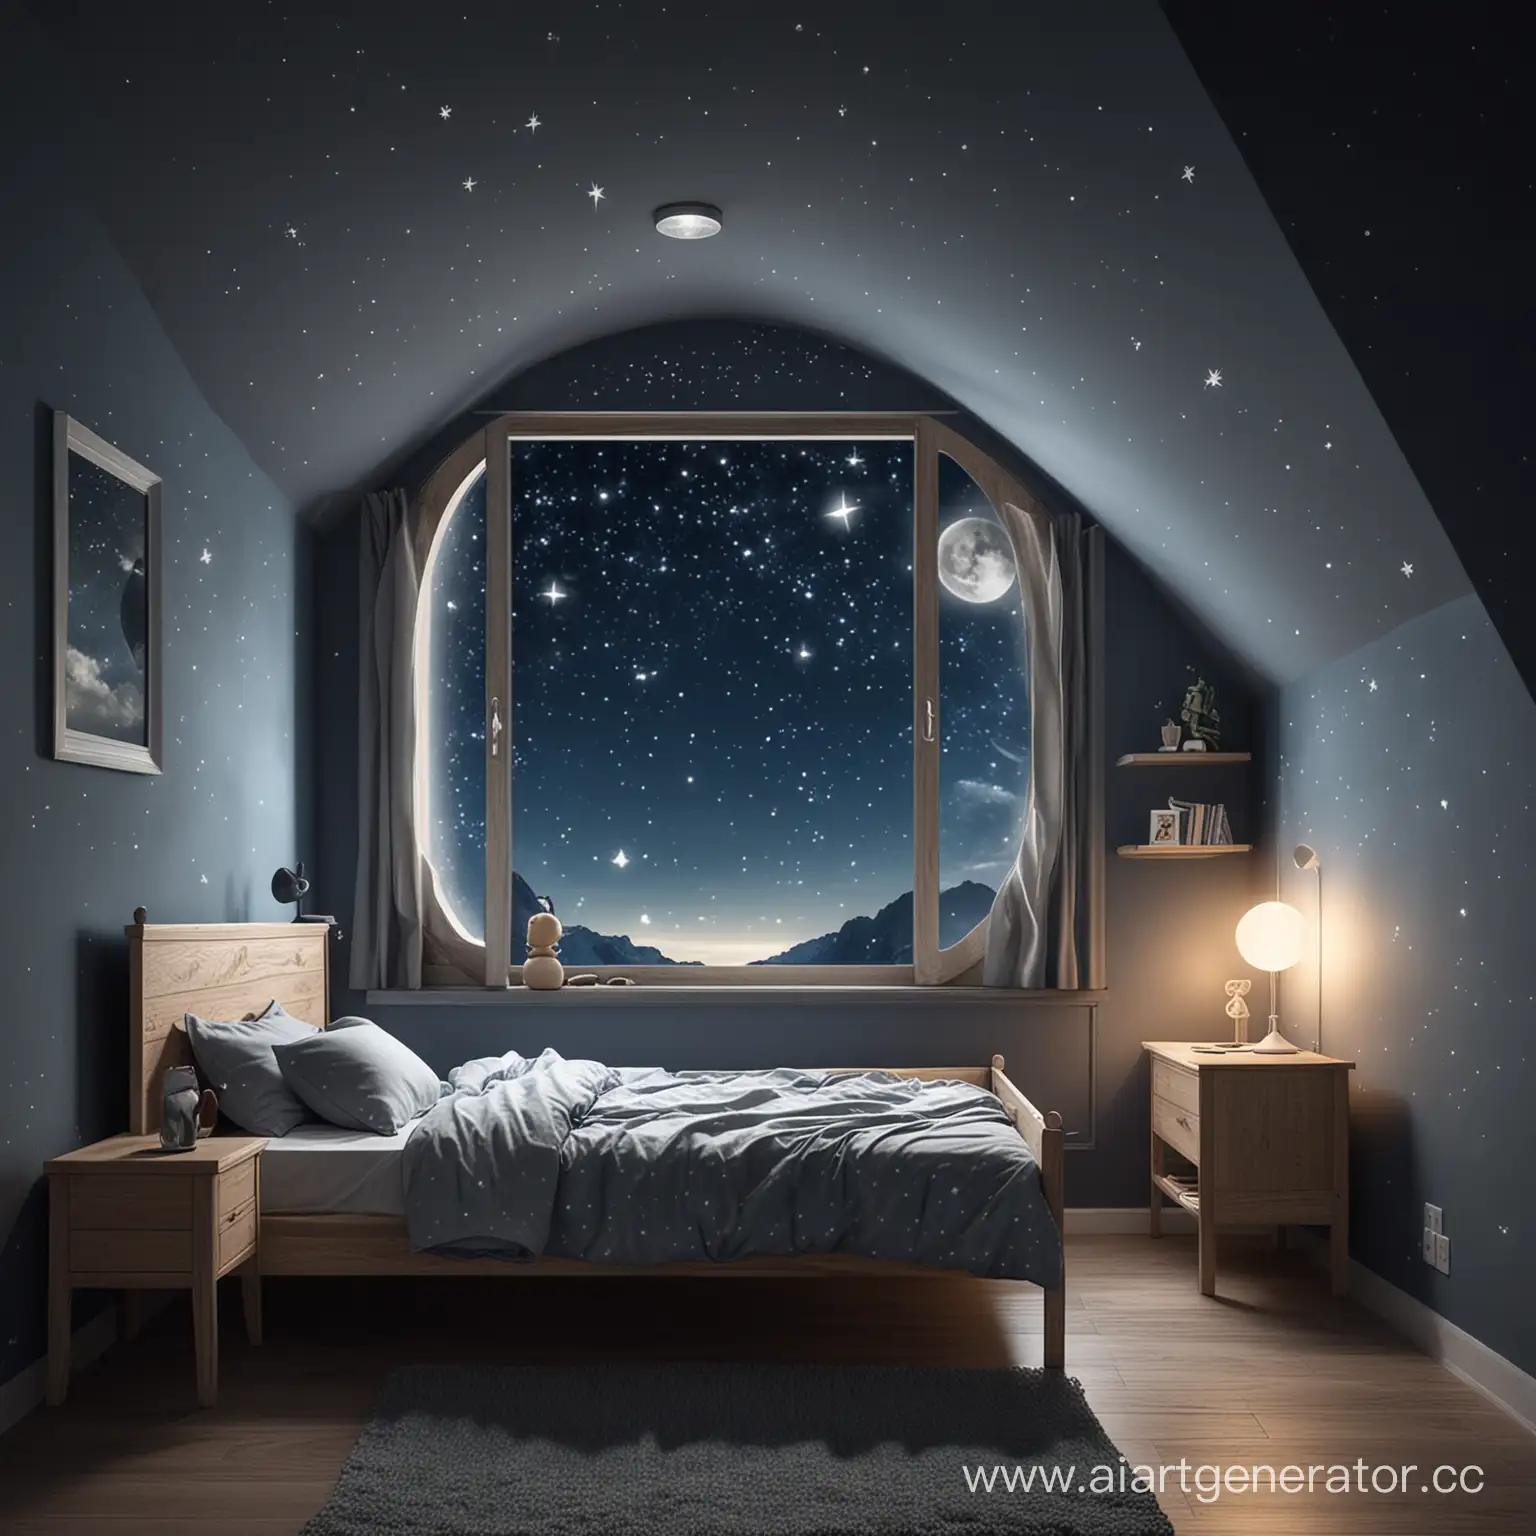 Boy-Gazing-at-Starry-Night-Sky-from-Bedroom-Window